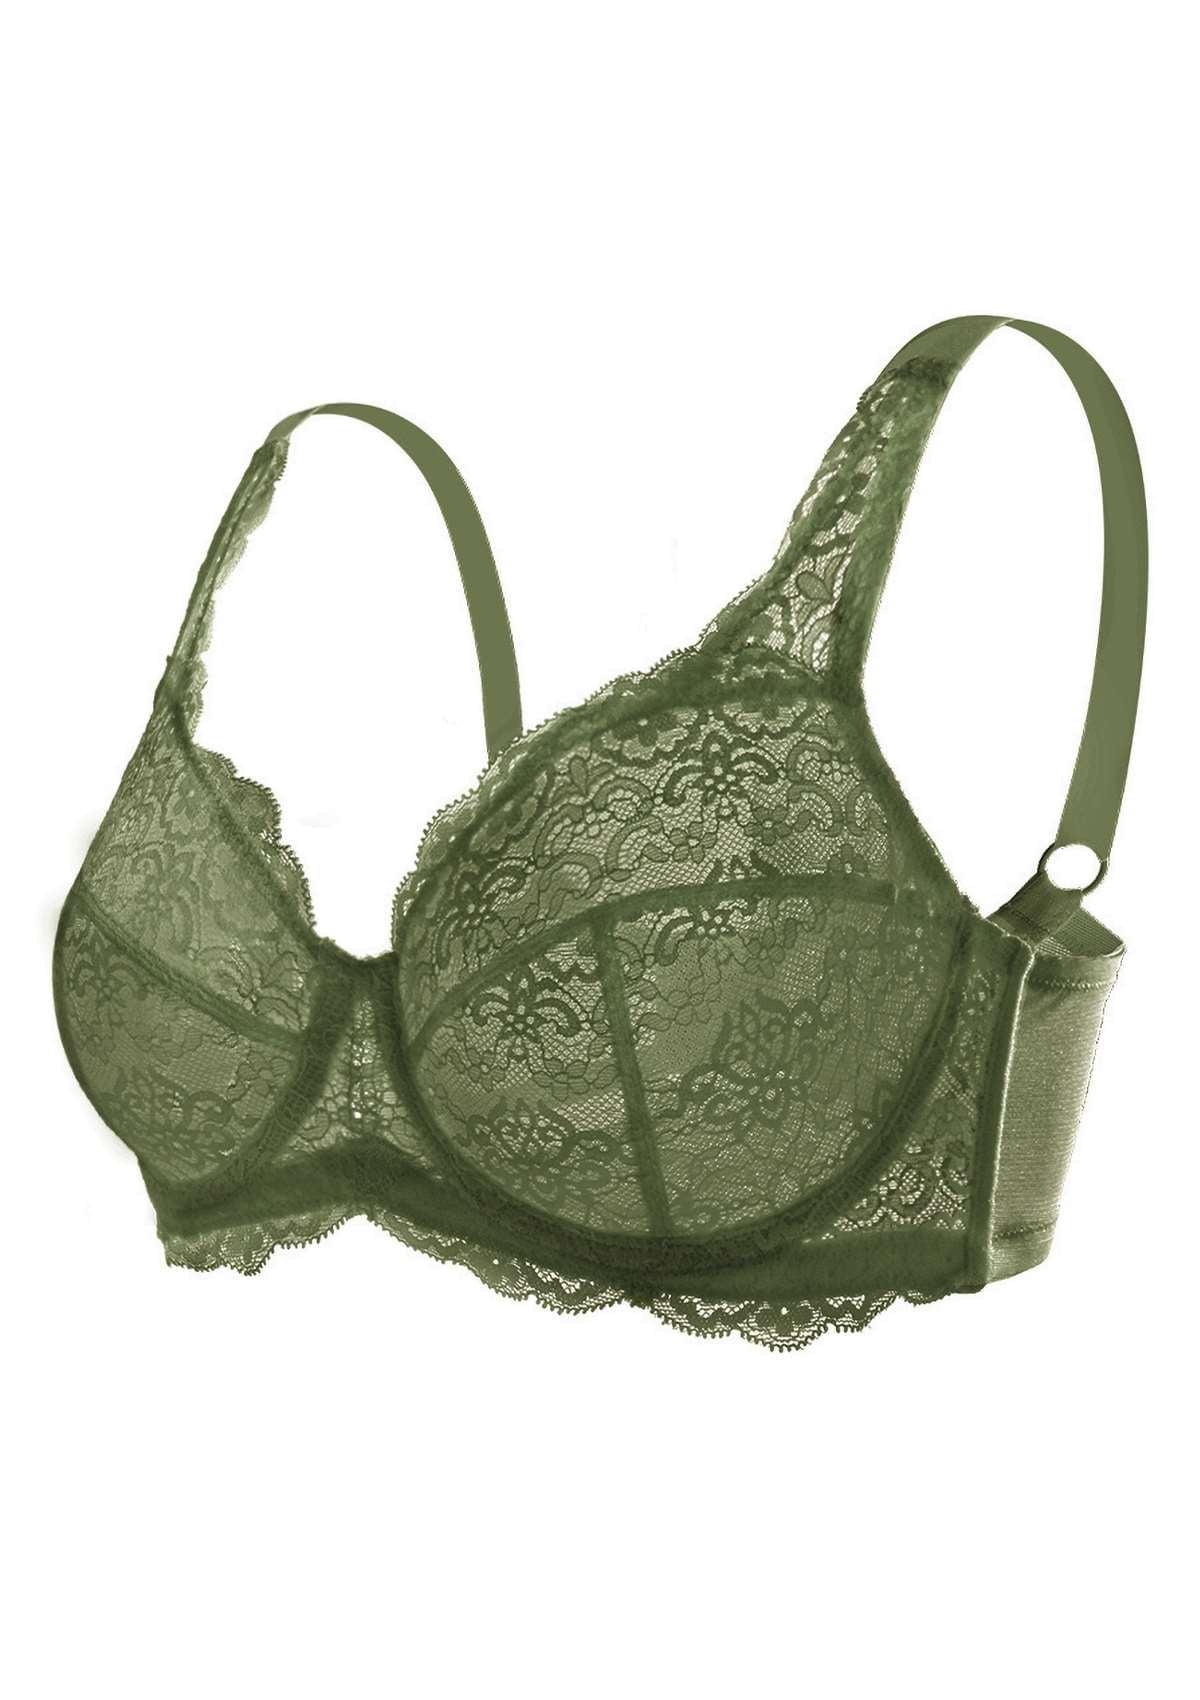 HSIA All-Over Floral Lace Unlined Bra: Minimizer Bra For Heavy Breasts - Dark Green / 36 / DD/E